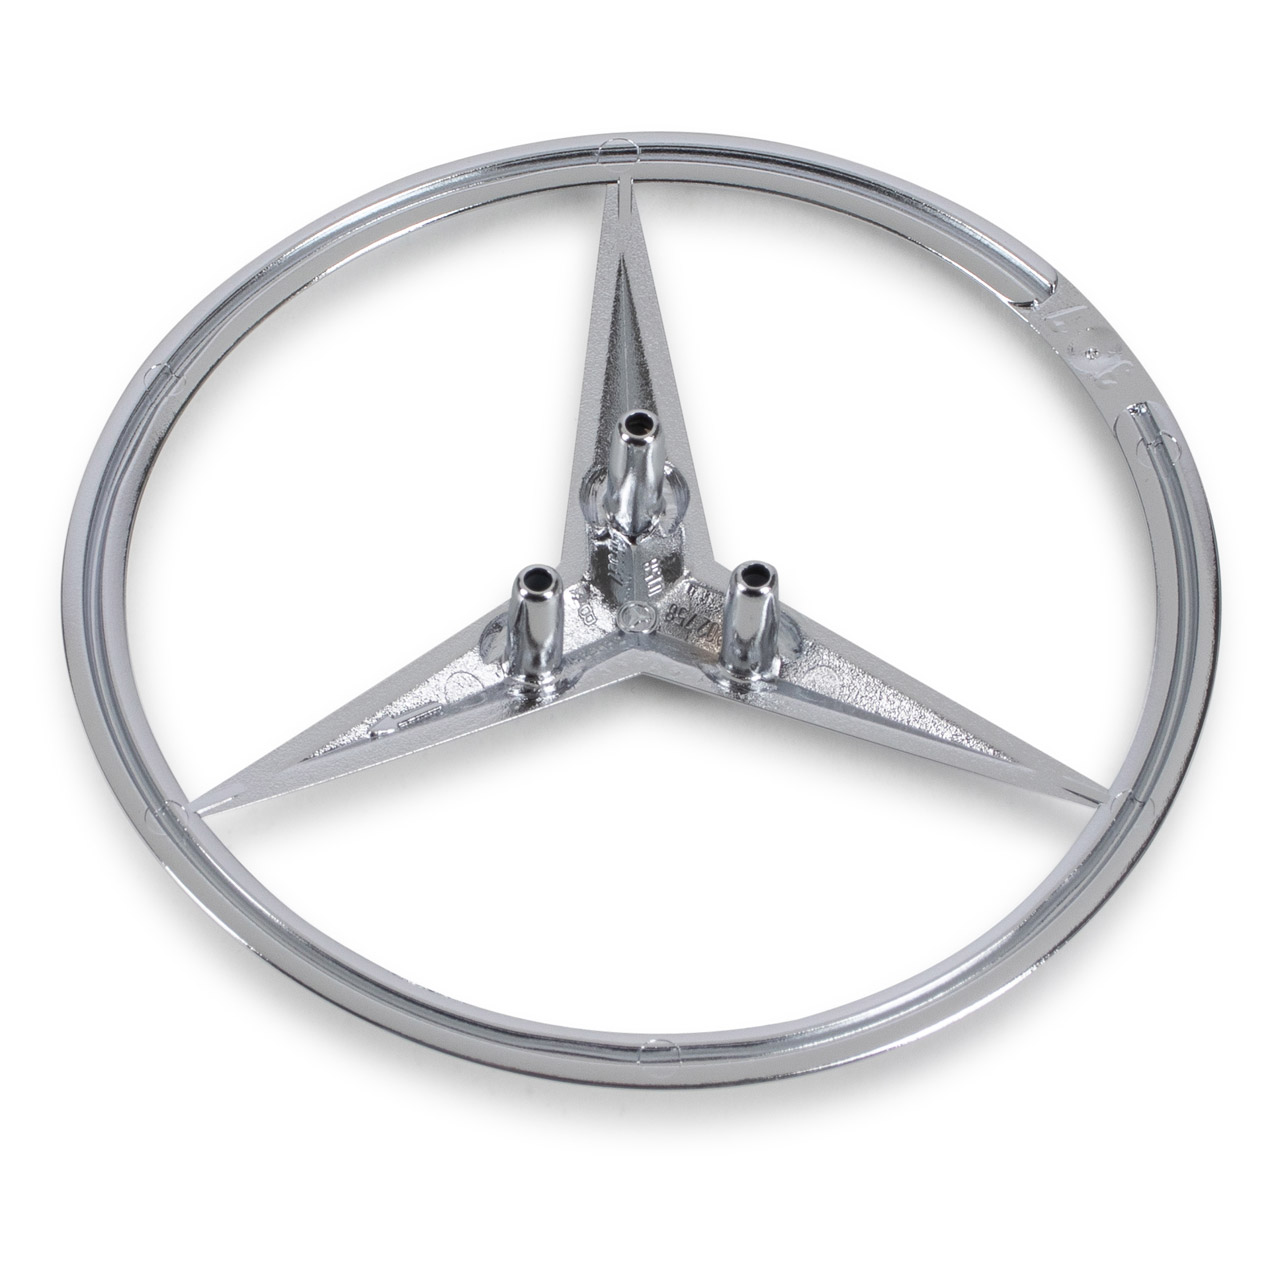 ORIGINAL Mercedes Emblem Heckklappe C-Klasse S202 M-Klasse W163 hinten 2027580158